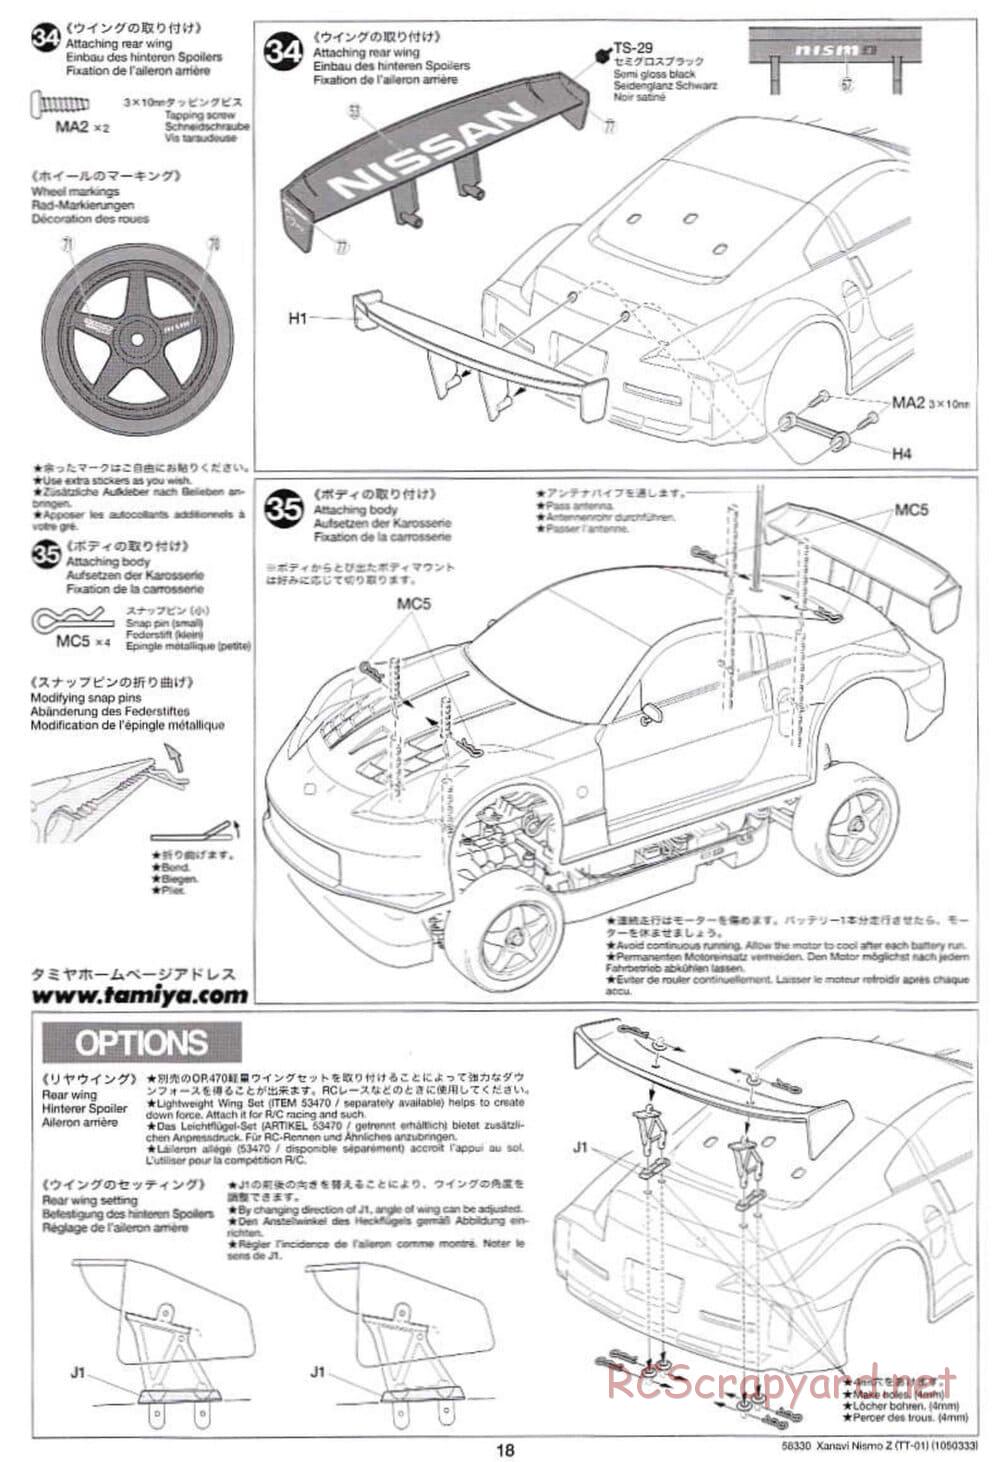 Tamiya - Xanavi Nismo Z - TT-01 Chassis - Manual - Page 18